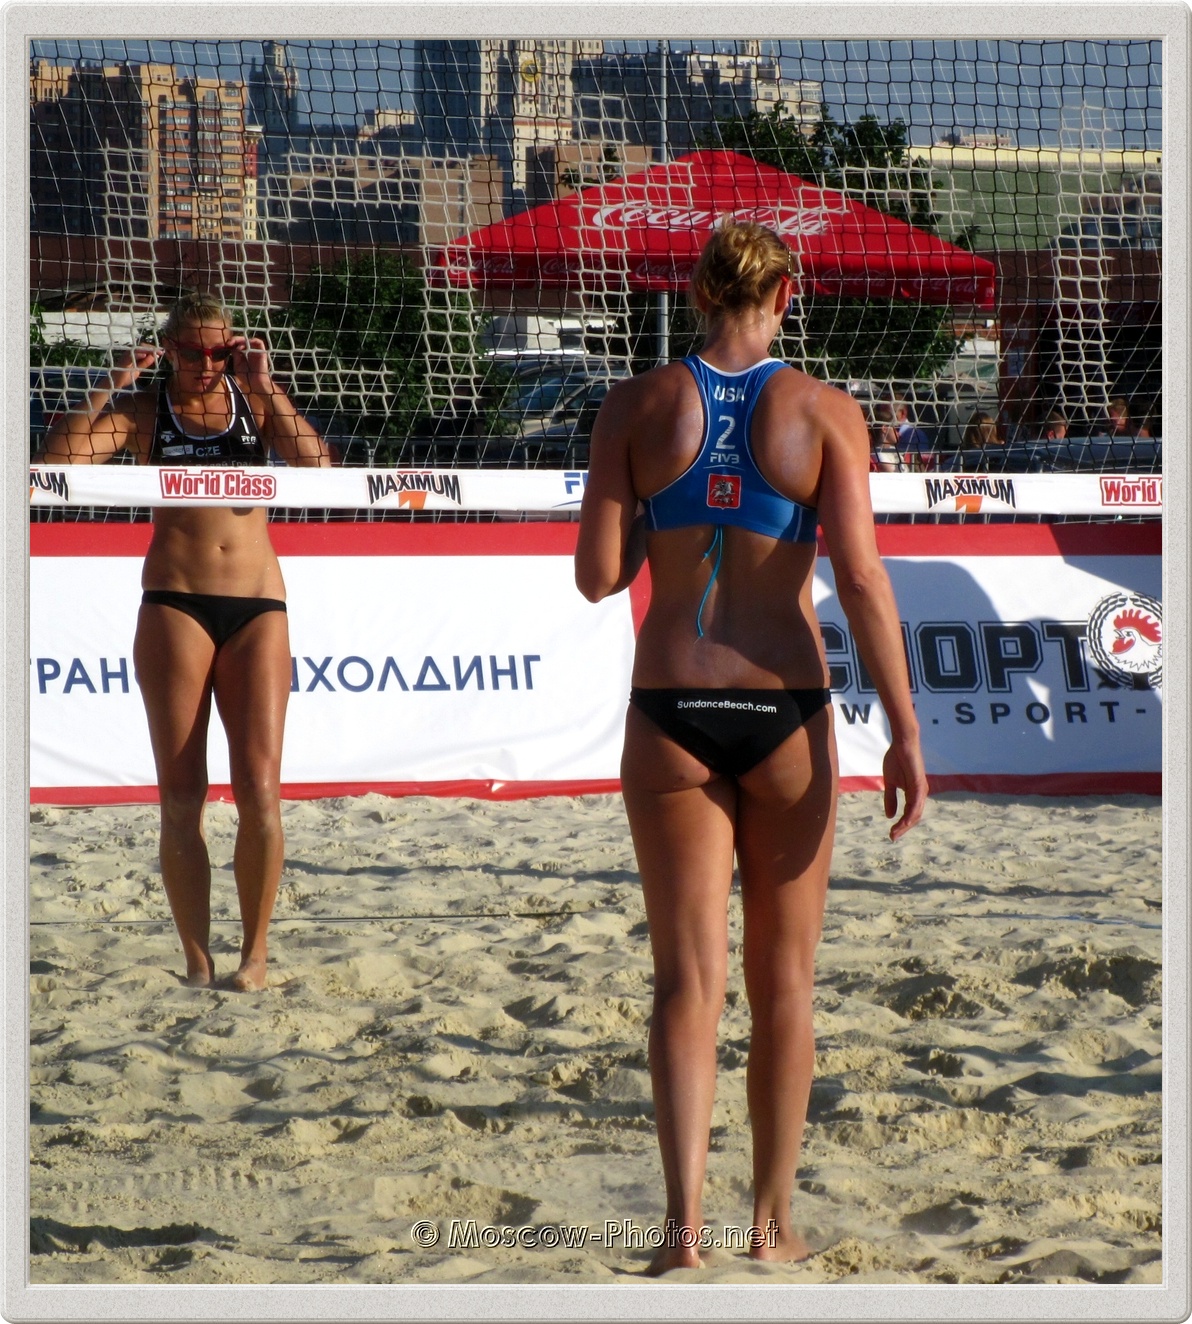 Lauren Fendrick (USA) vs. Hana Klapalova (Czechia) 